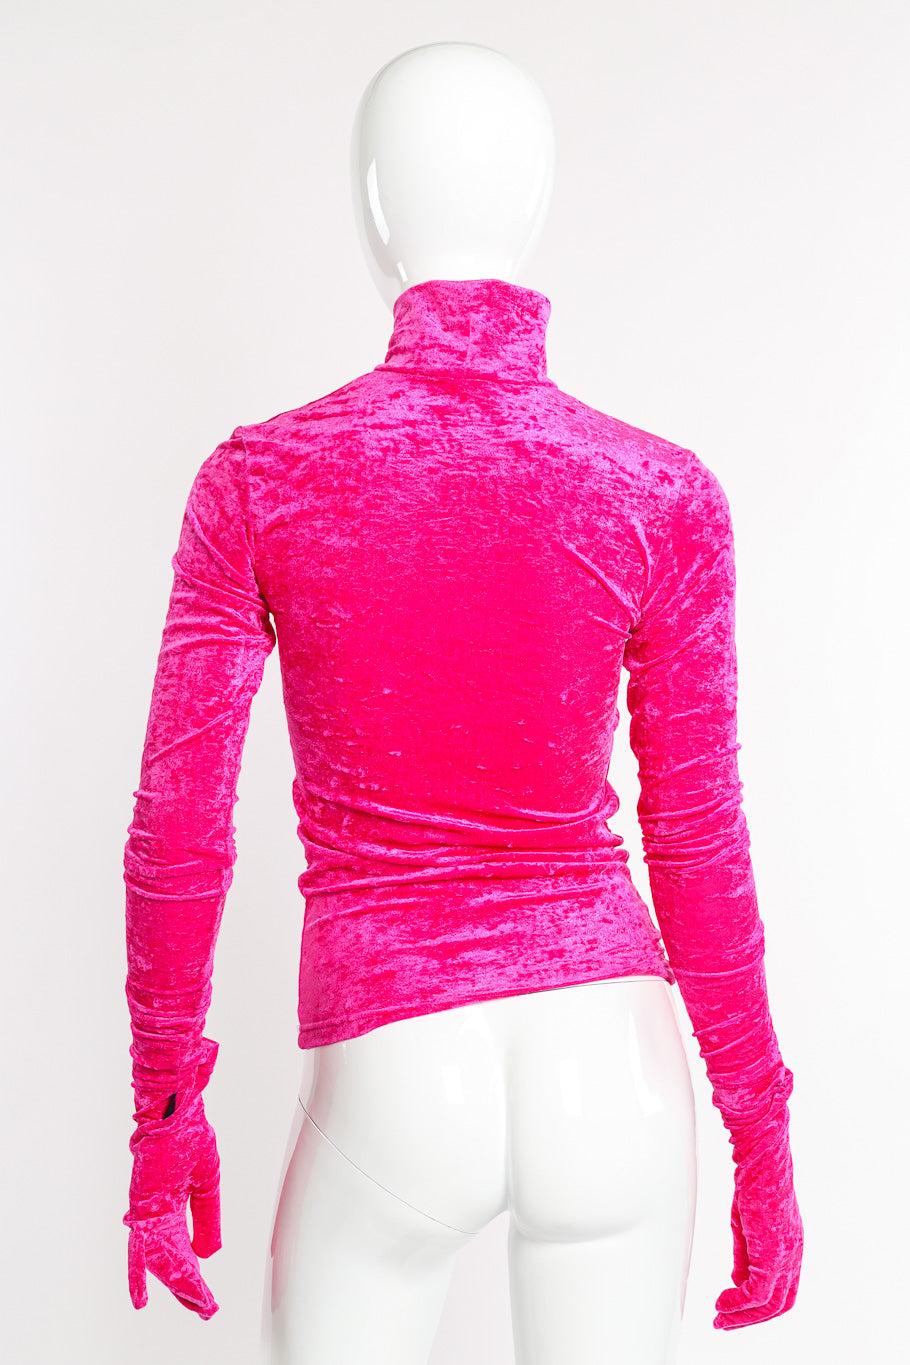 Balenciaga Velvet Turtleneck with Gloves back view on mannequin @Recessla